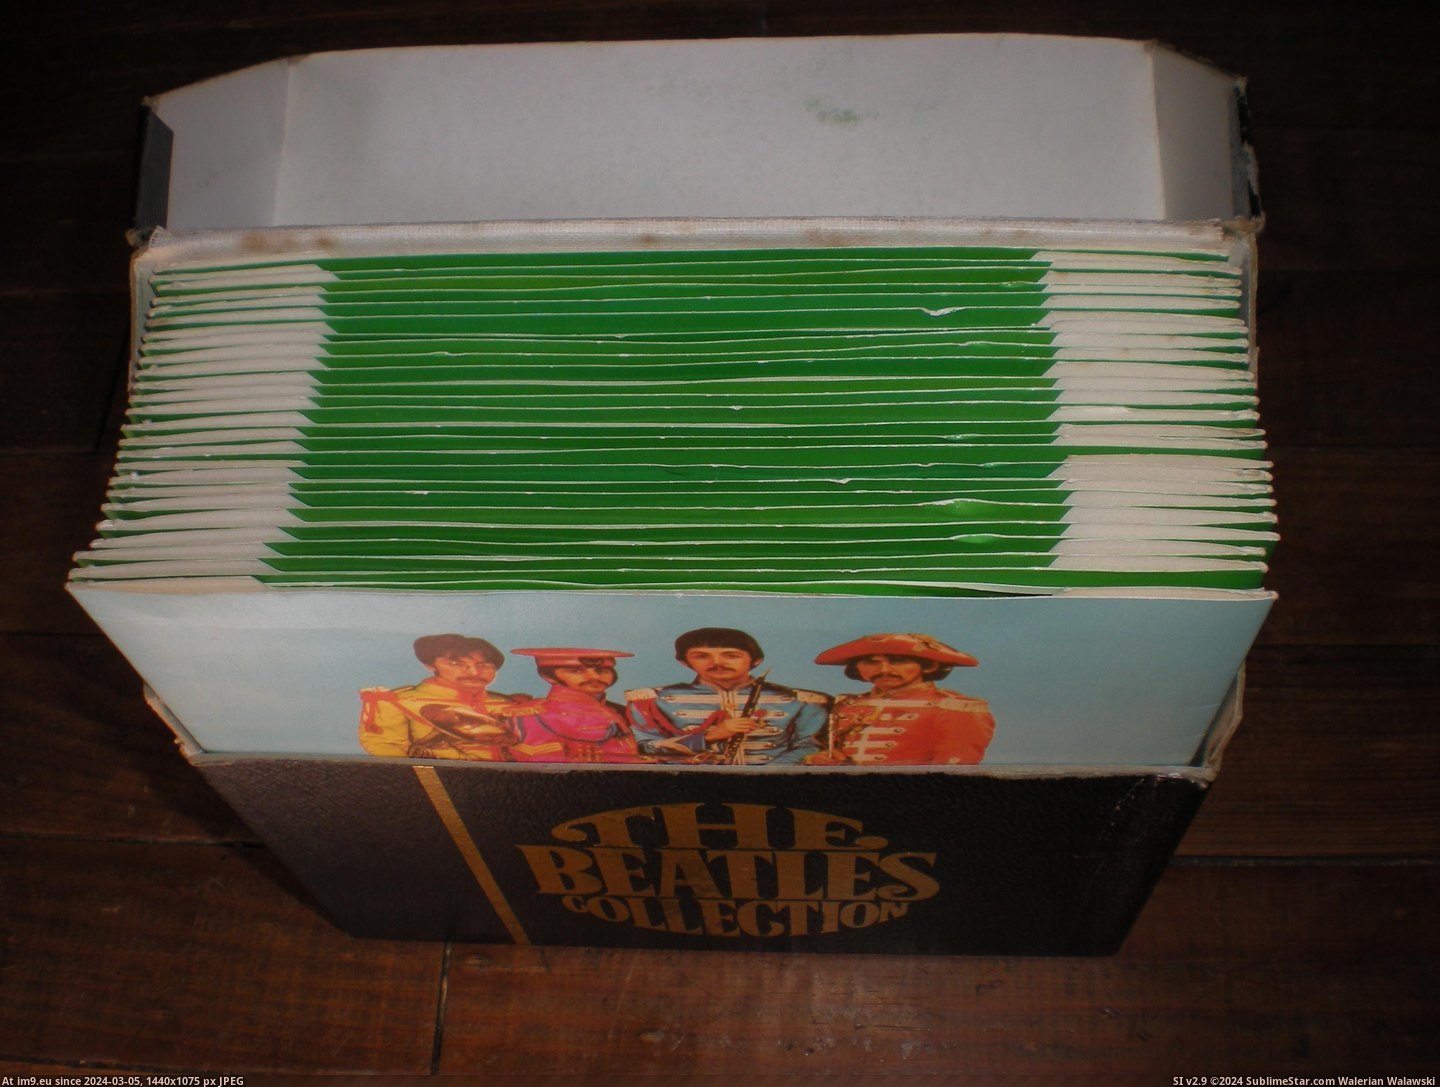 #Collection #Beatles #Box Beatles Collection Box 3 Pic. (Изображение из альбом new 1))